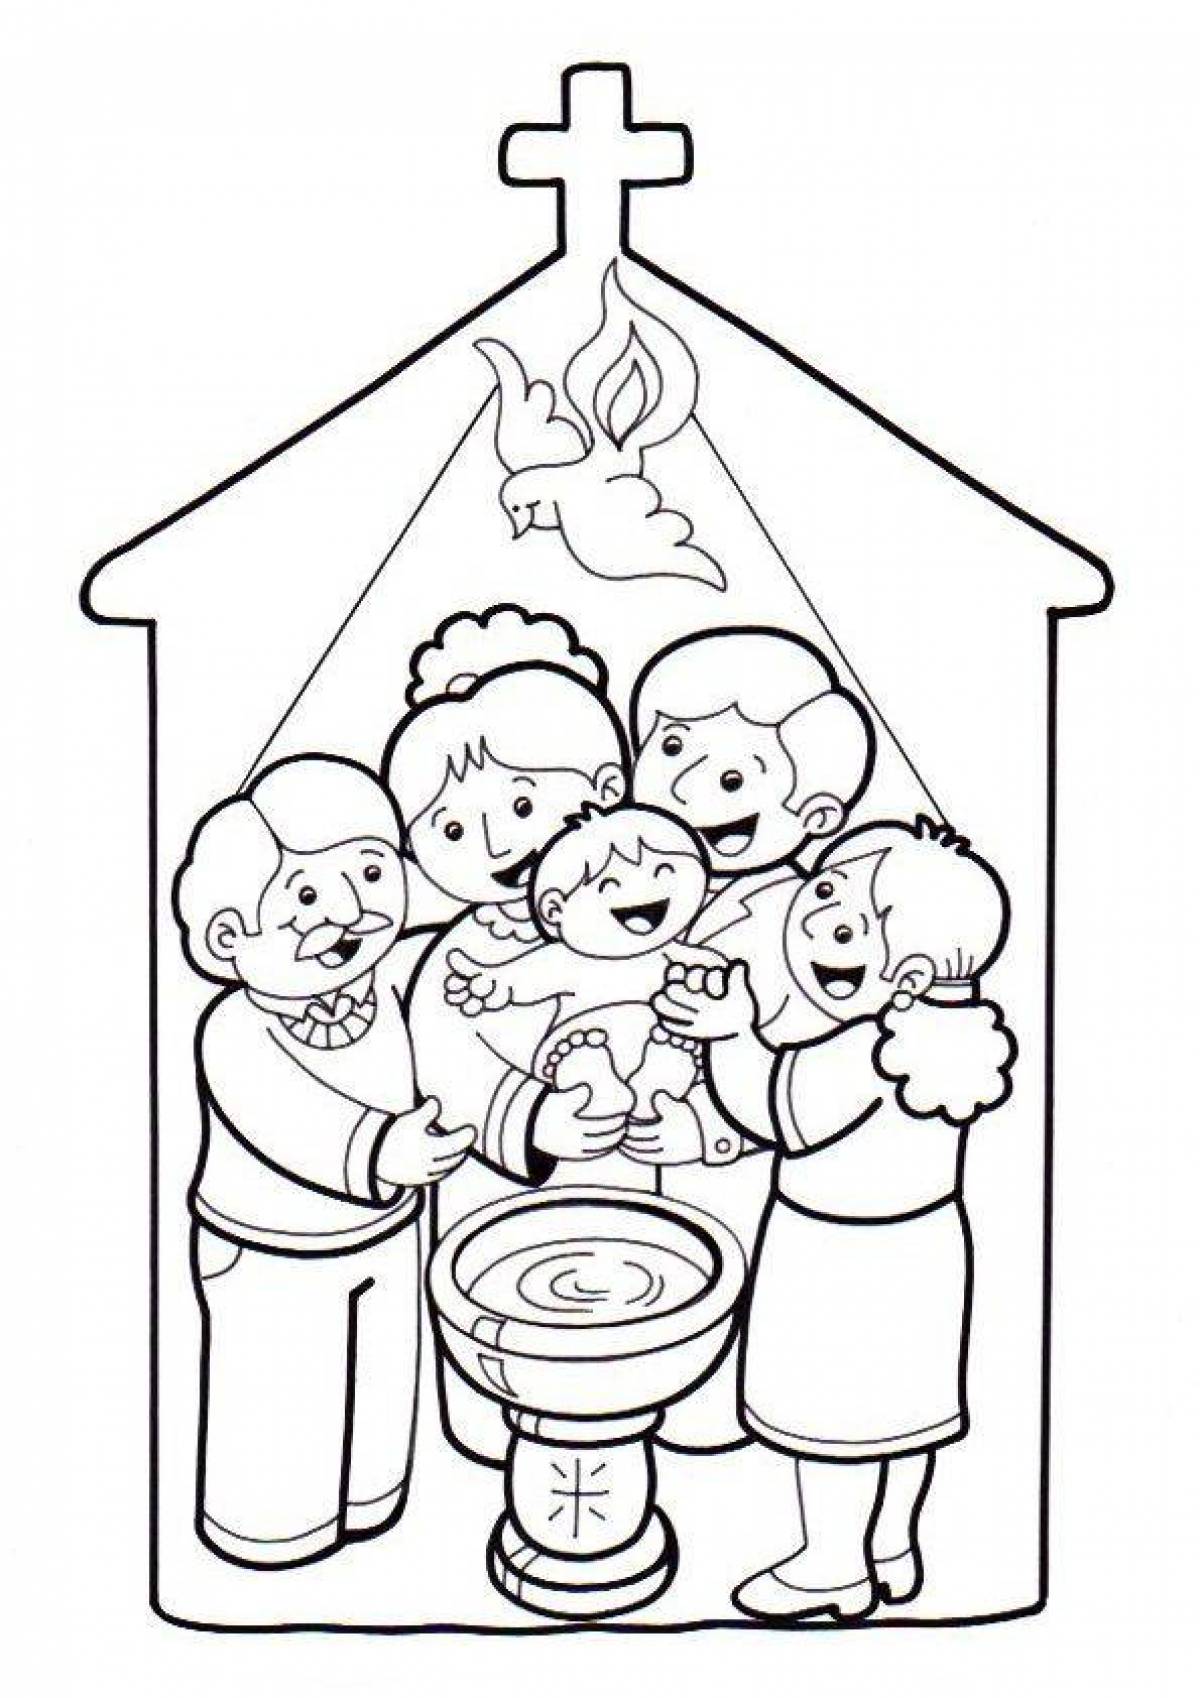 Inspirational baptism coloring book for kids